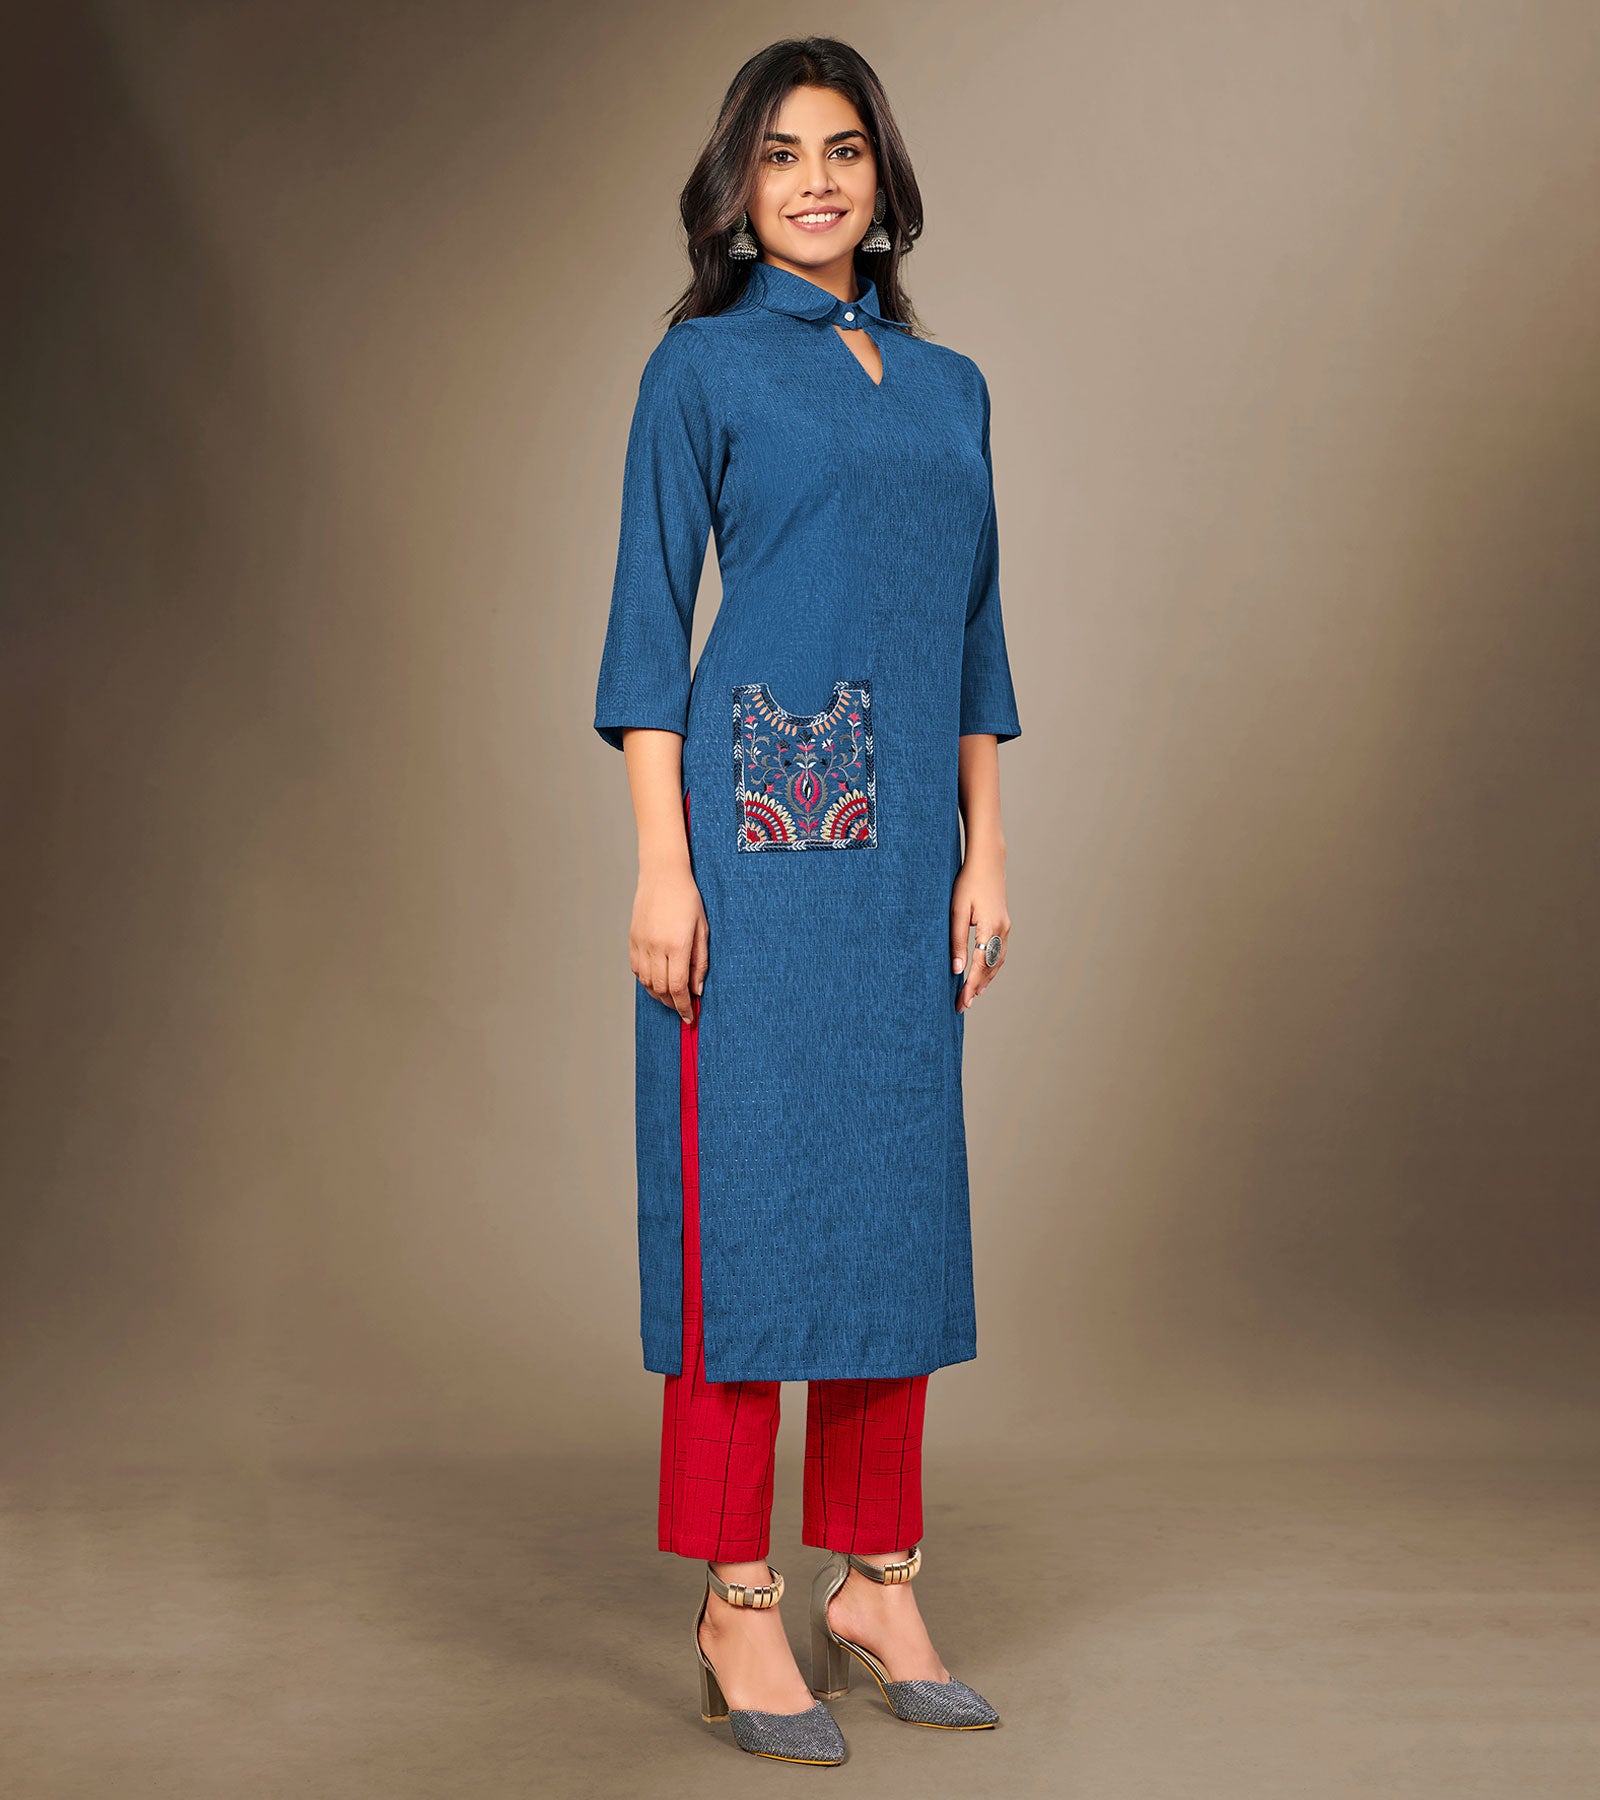 Buy Trendif Women's Rayon Solid Royal Blue Kurti/Kurta (3484) at Amazon.in